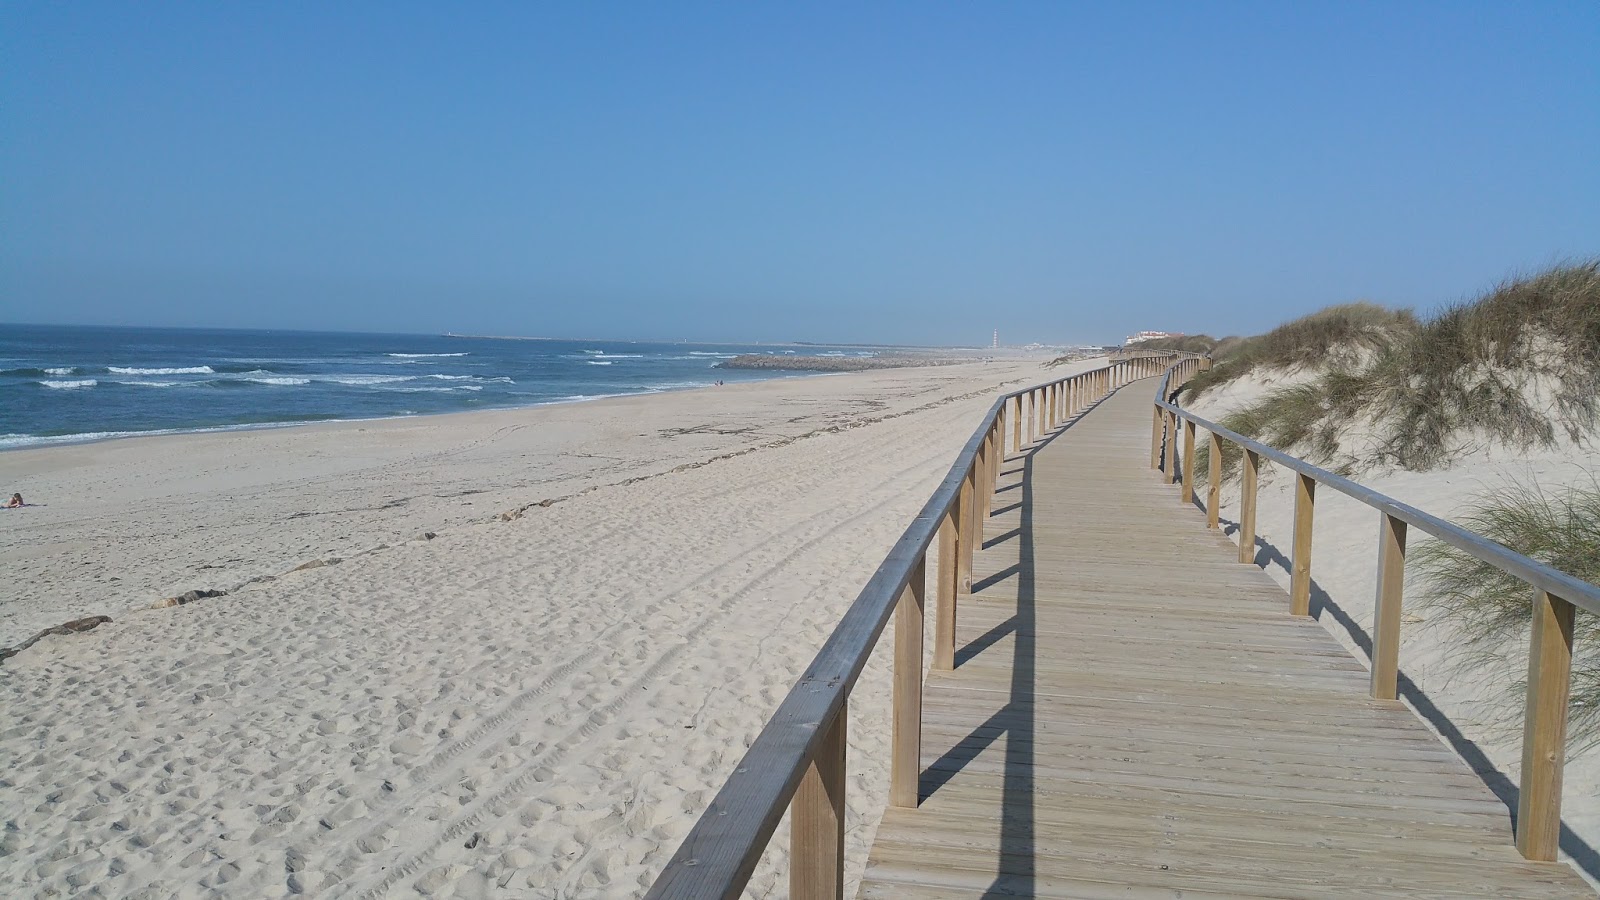 Photo of Praia da Costa Nova - popular place among relax connoisseurs